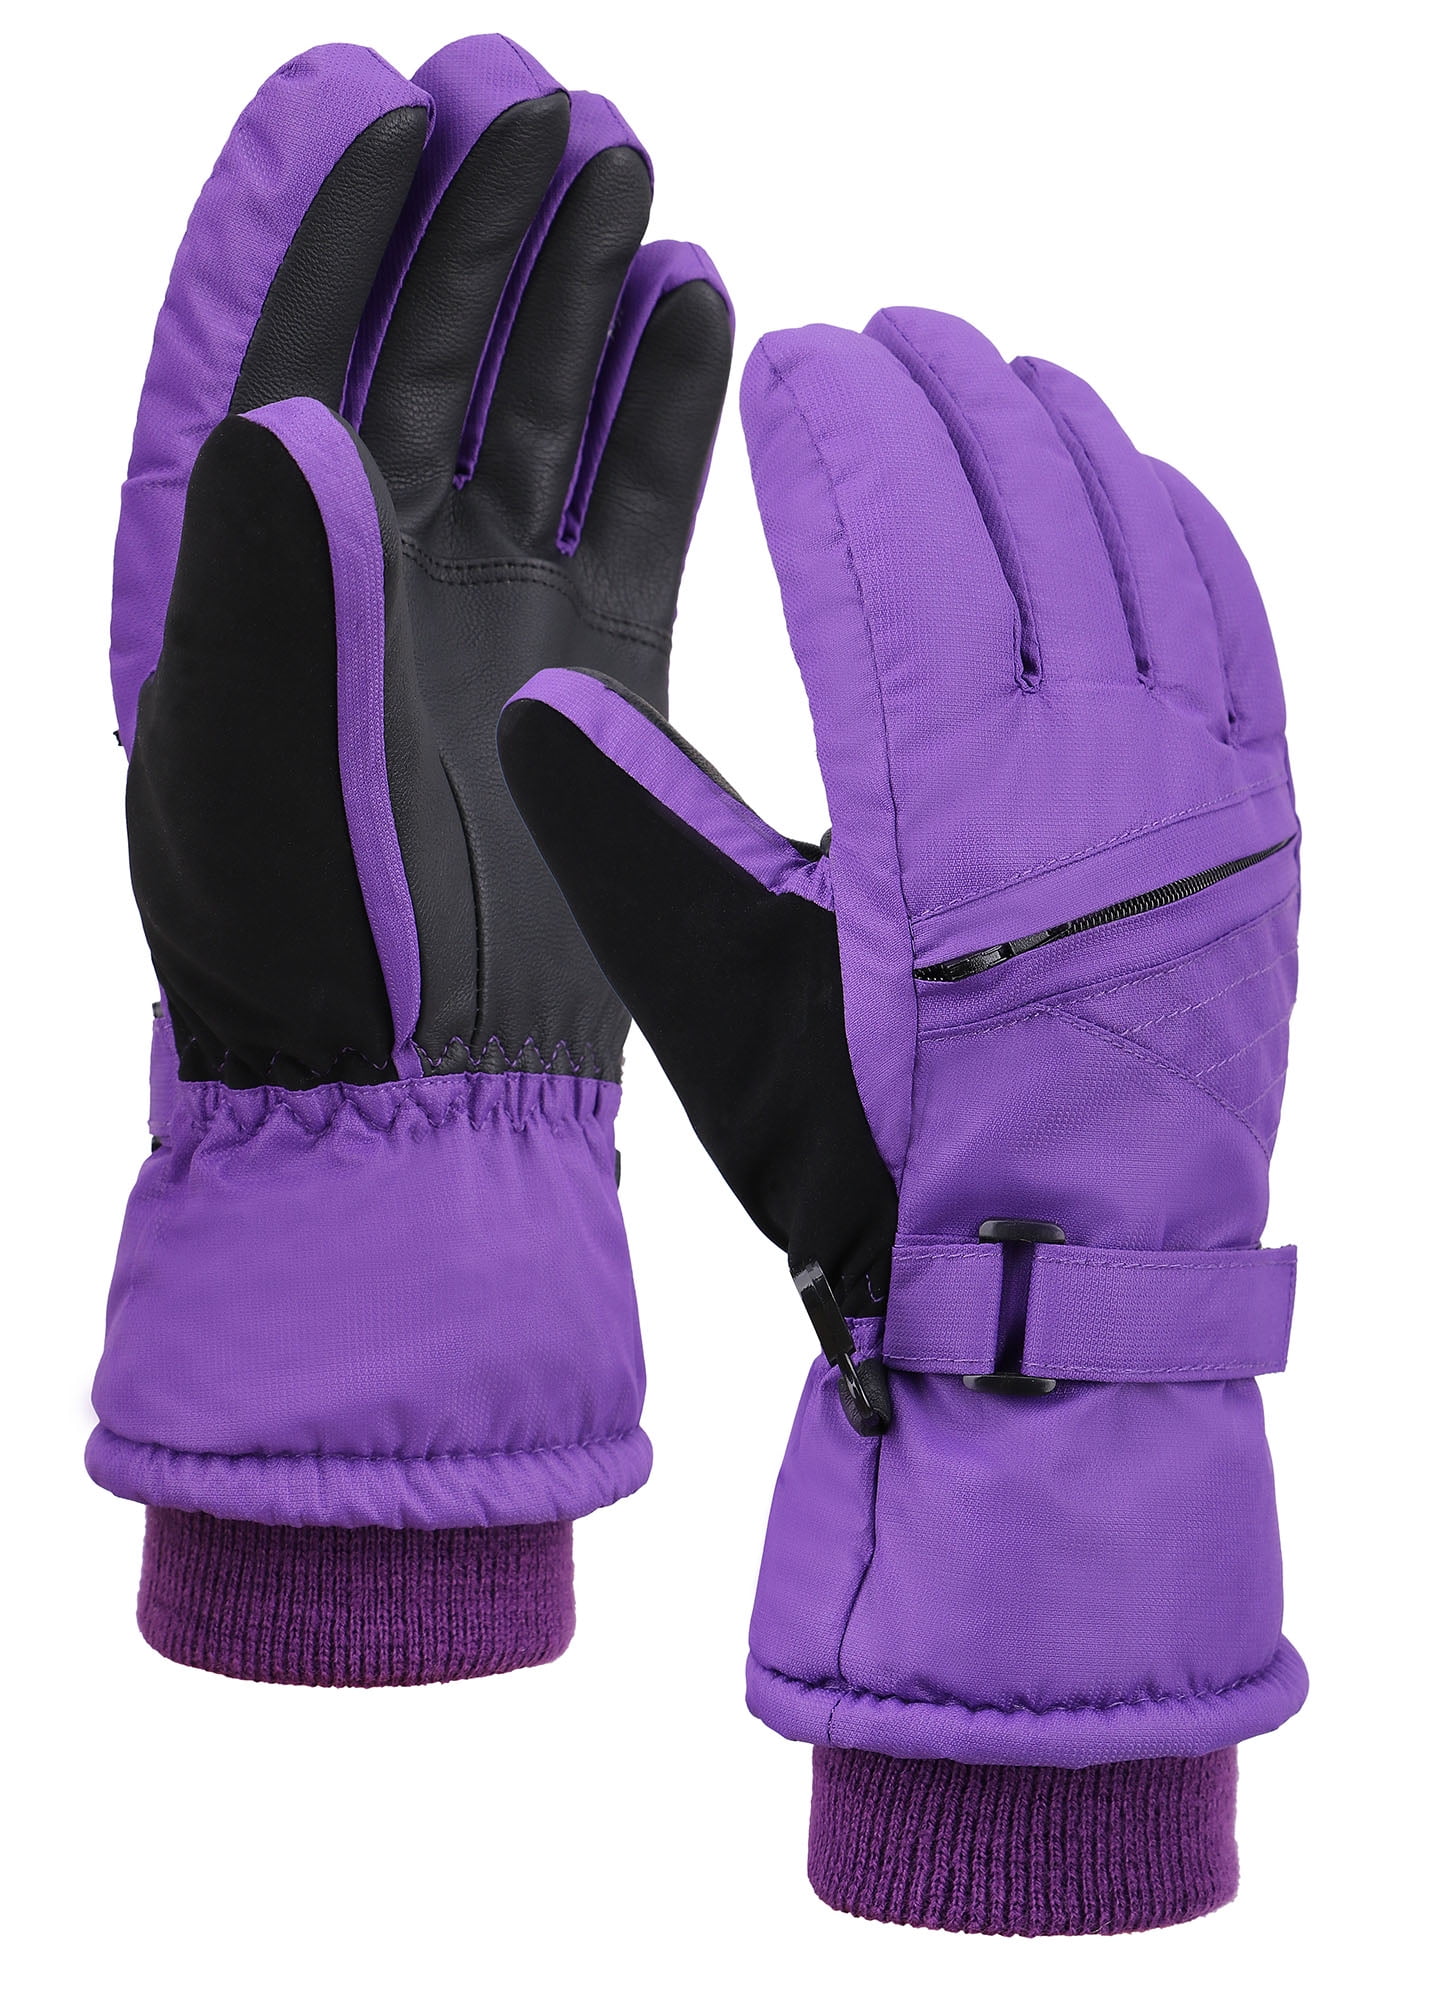 Kids 3M Thinsulate and Waterproof Ski Gloves Snow Mittens 